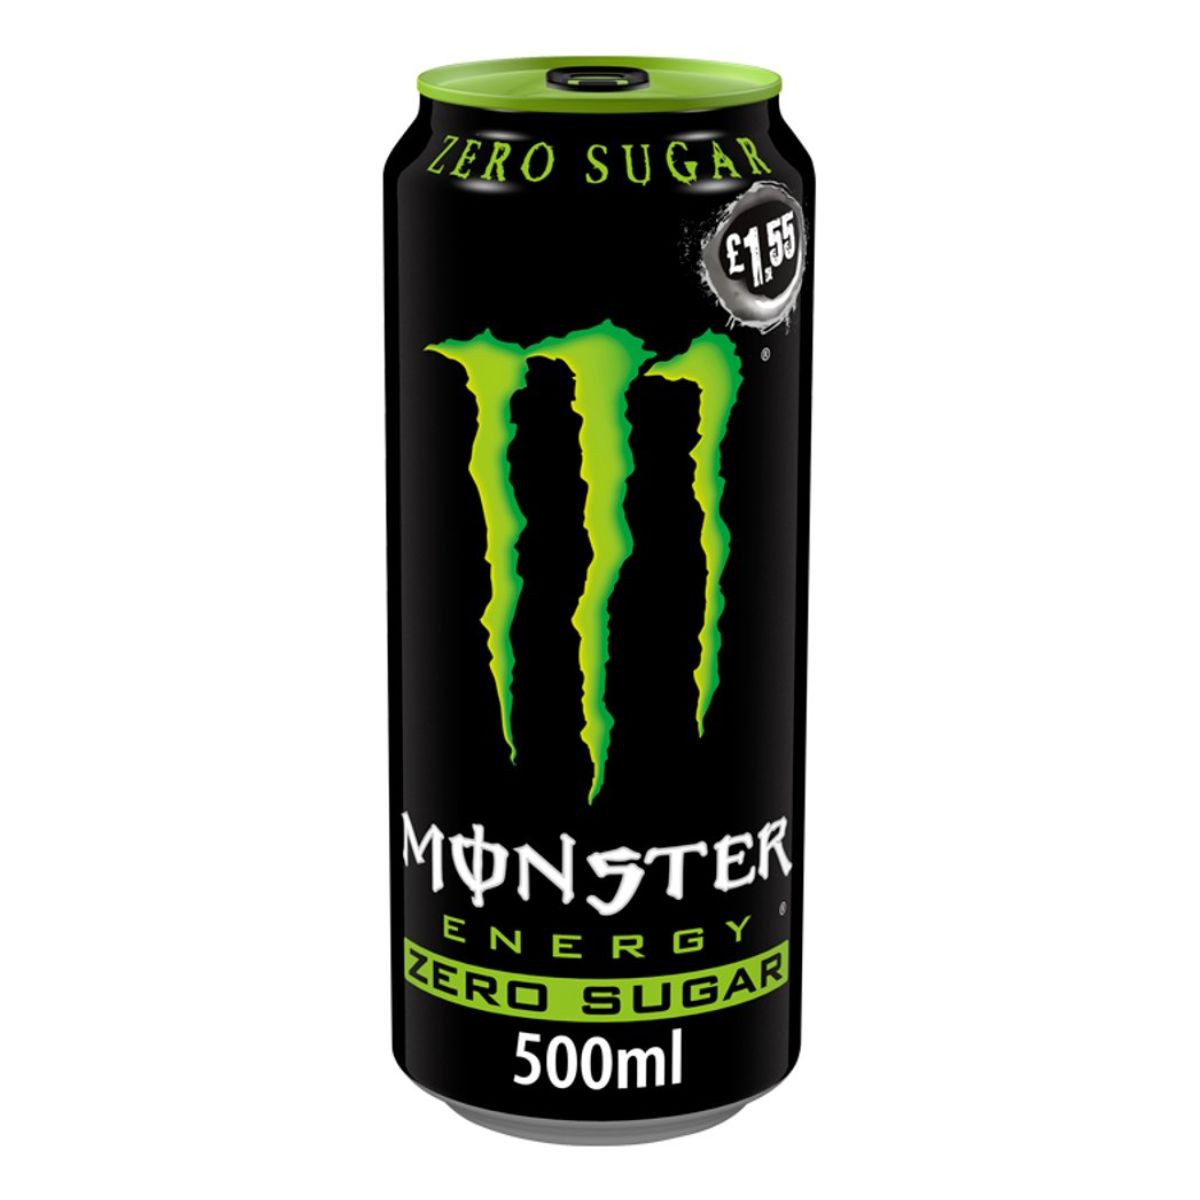 Monster - Energy Drink Zero Sugar - 500ml.